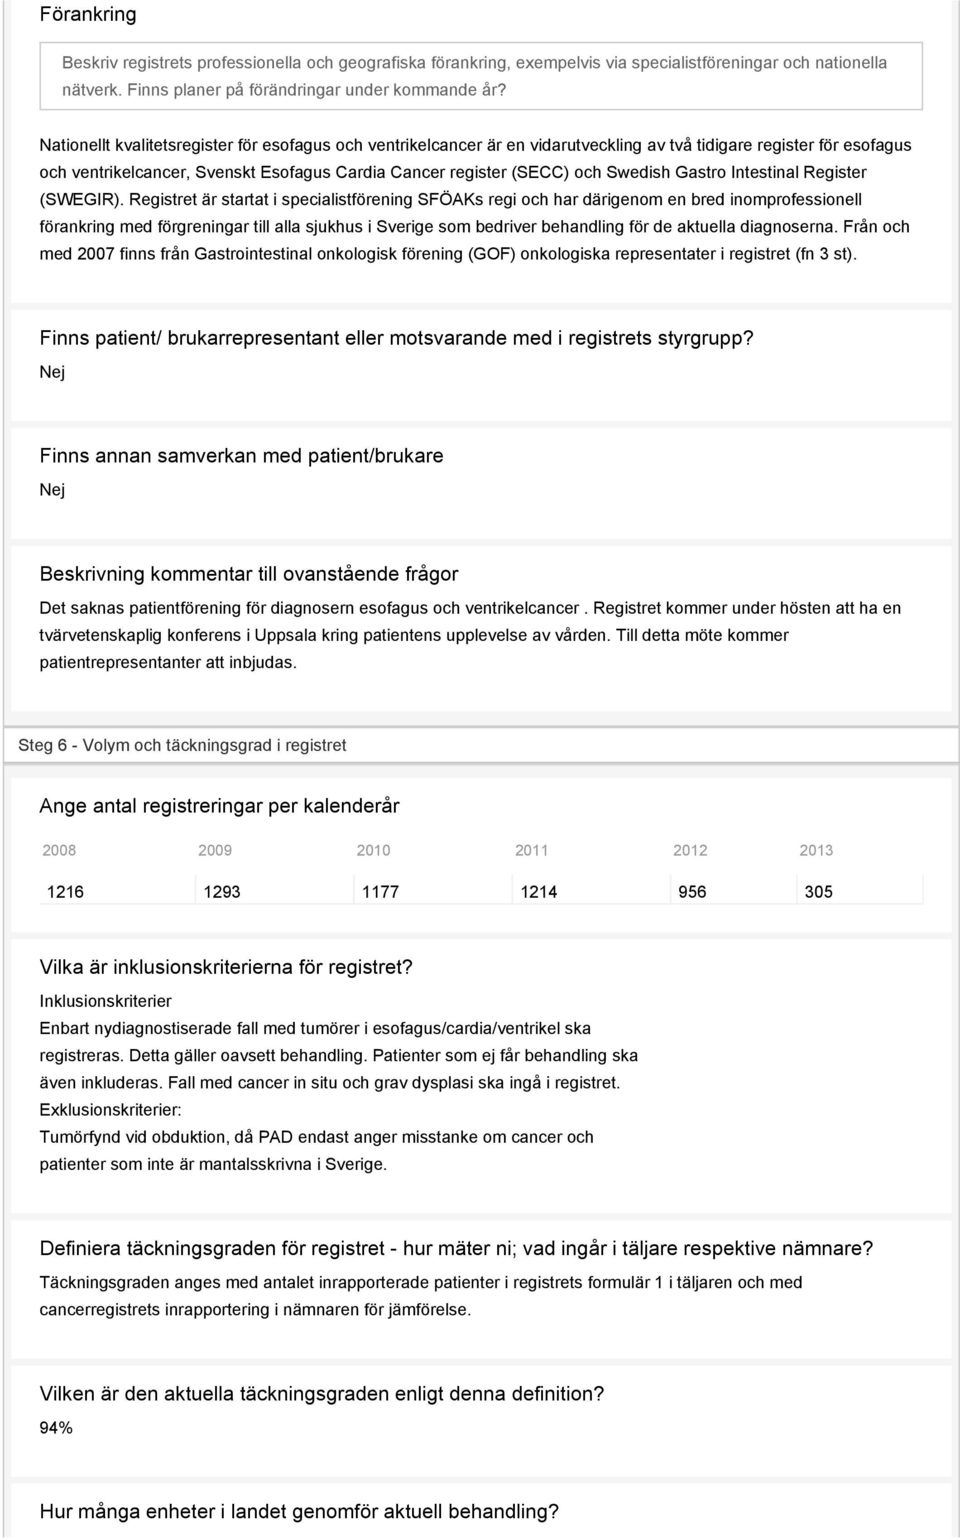 Swedish Gastro Intestinal Register (SWEGIR).